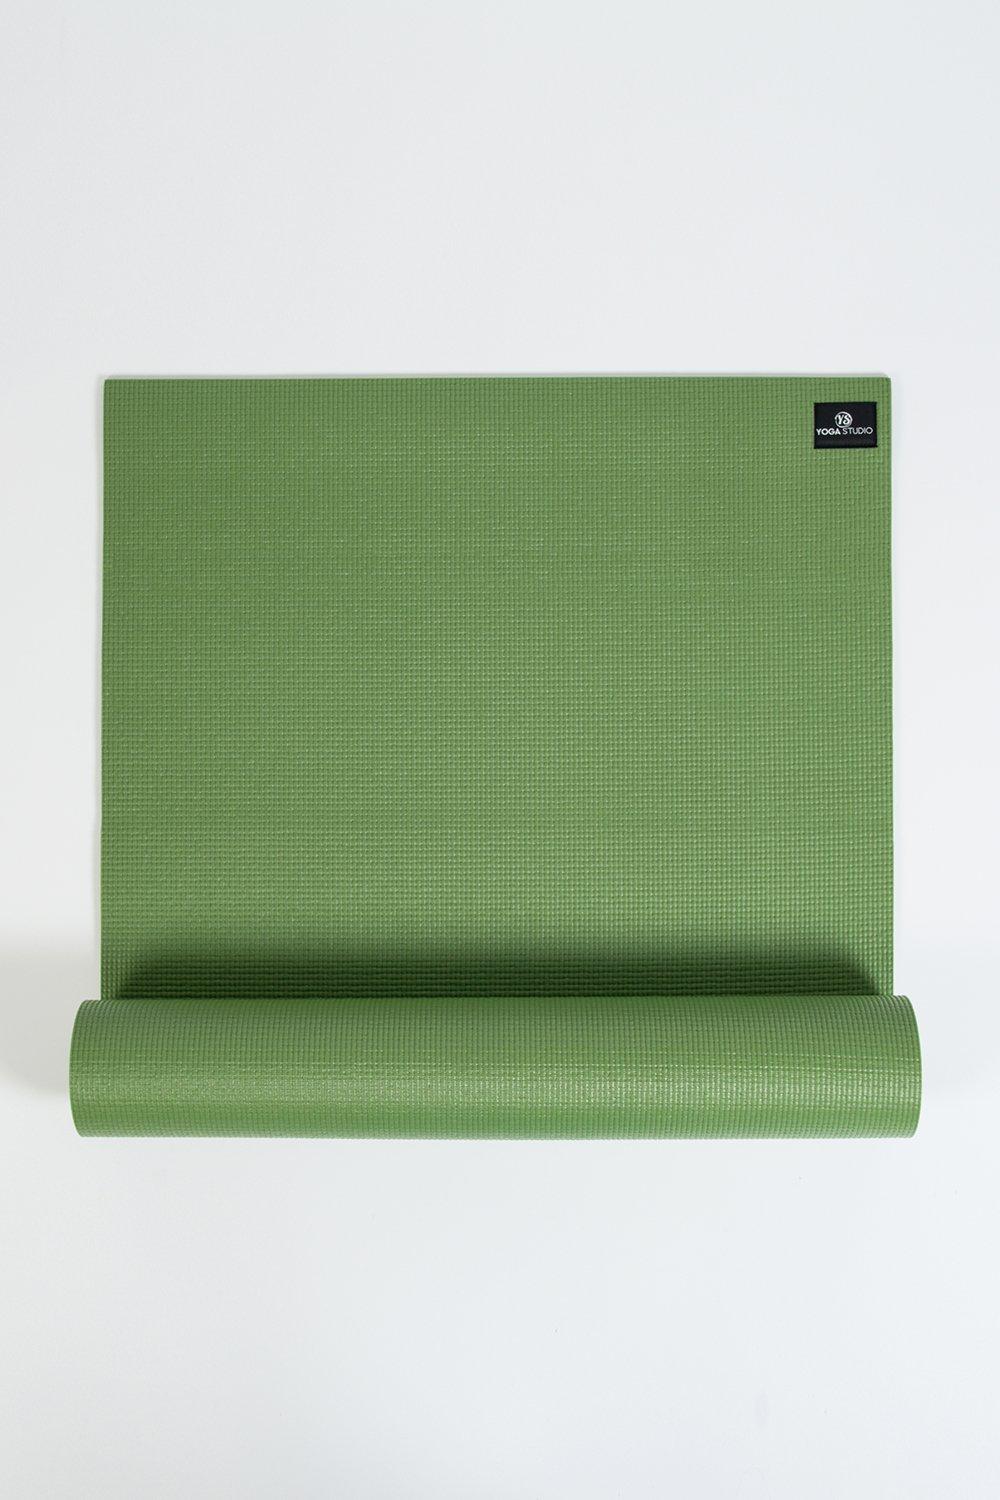 Yoga Studio Sticky Yoga Mat 6mm|green